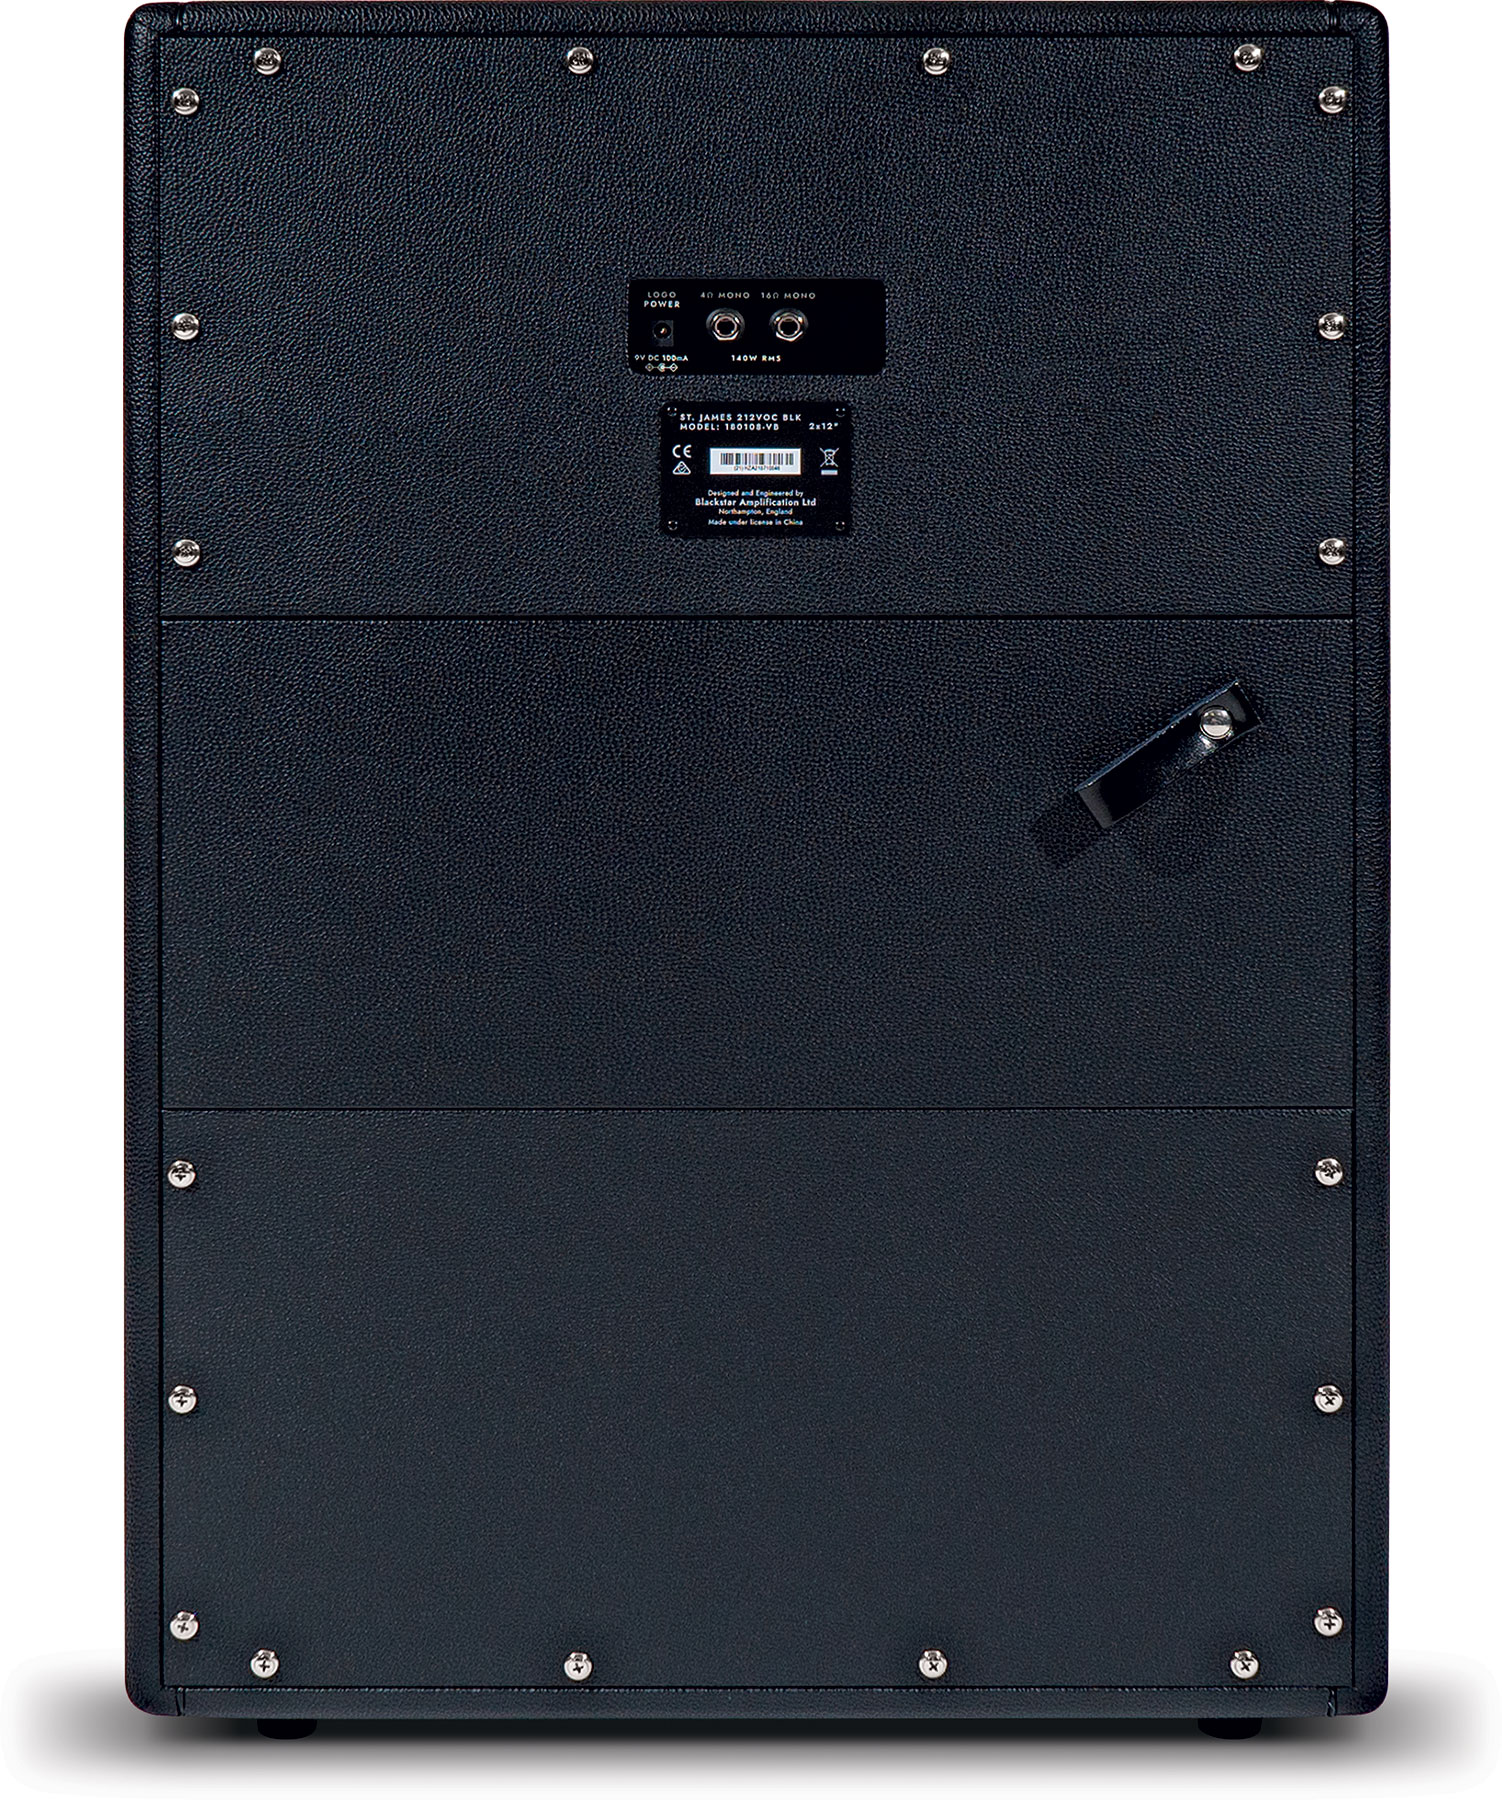 Blackstar St. James 212 Voc 2x12 140w 4/16-ohms Black - Boxen für E-Gitarre Verstärker - Variation 2